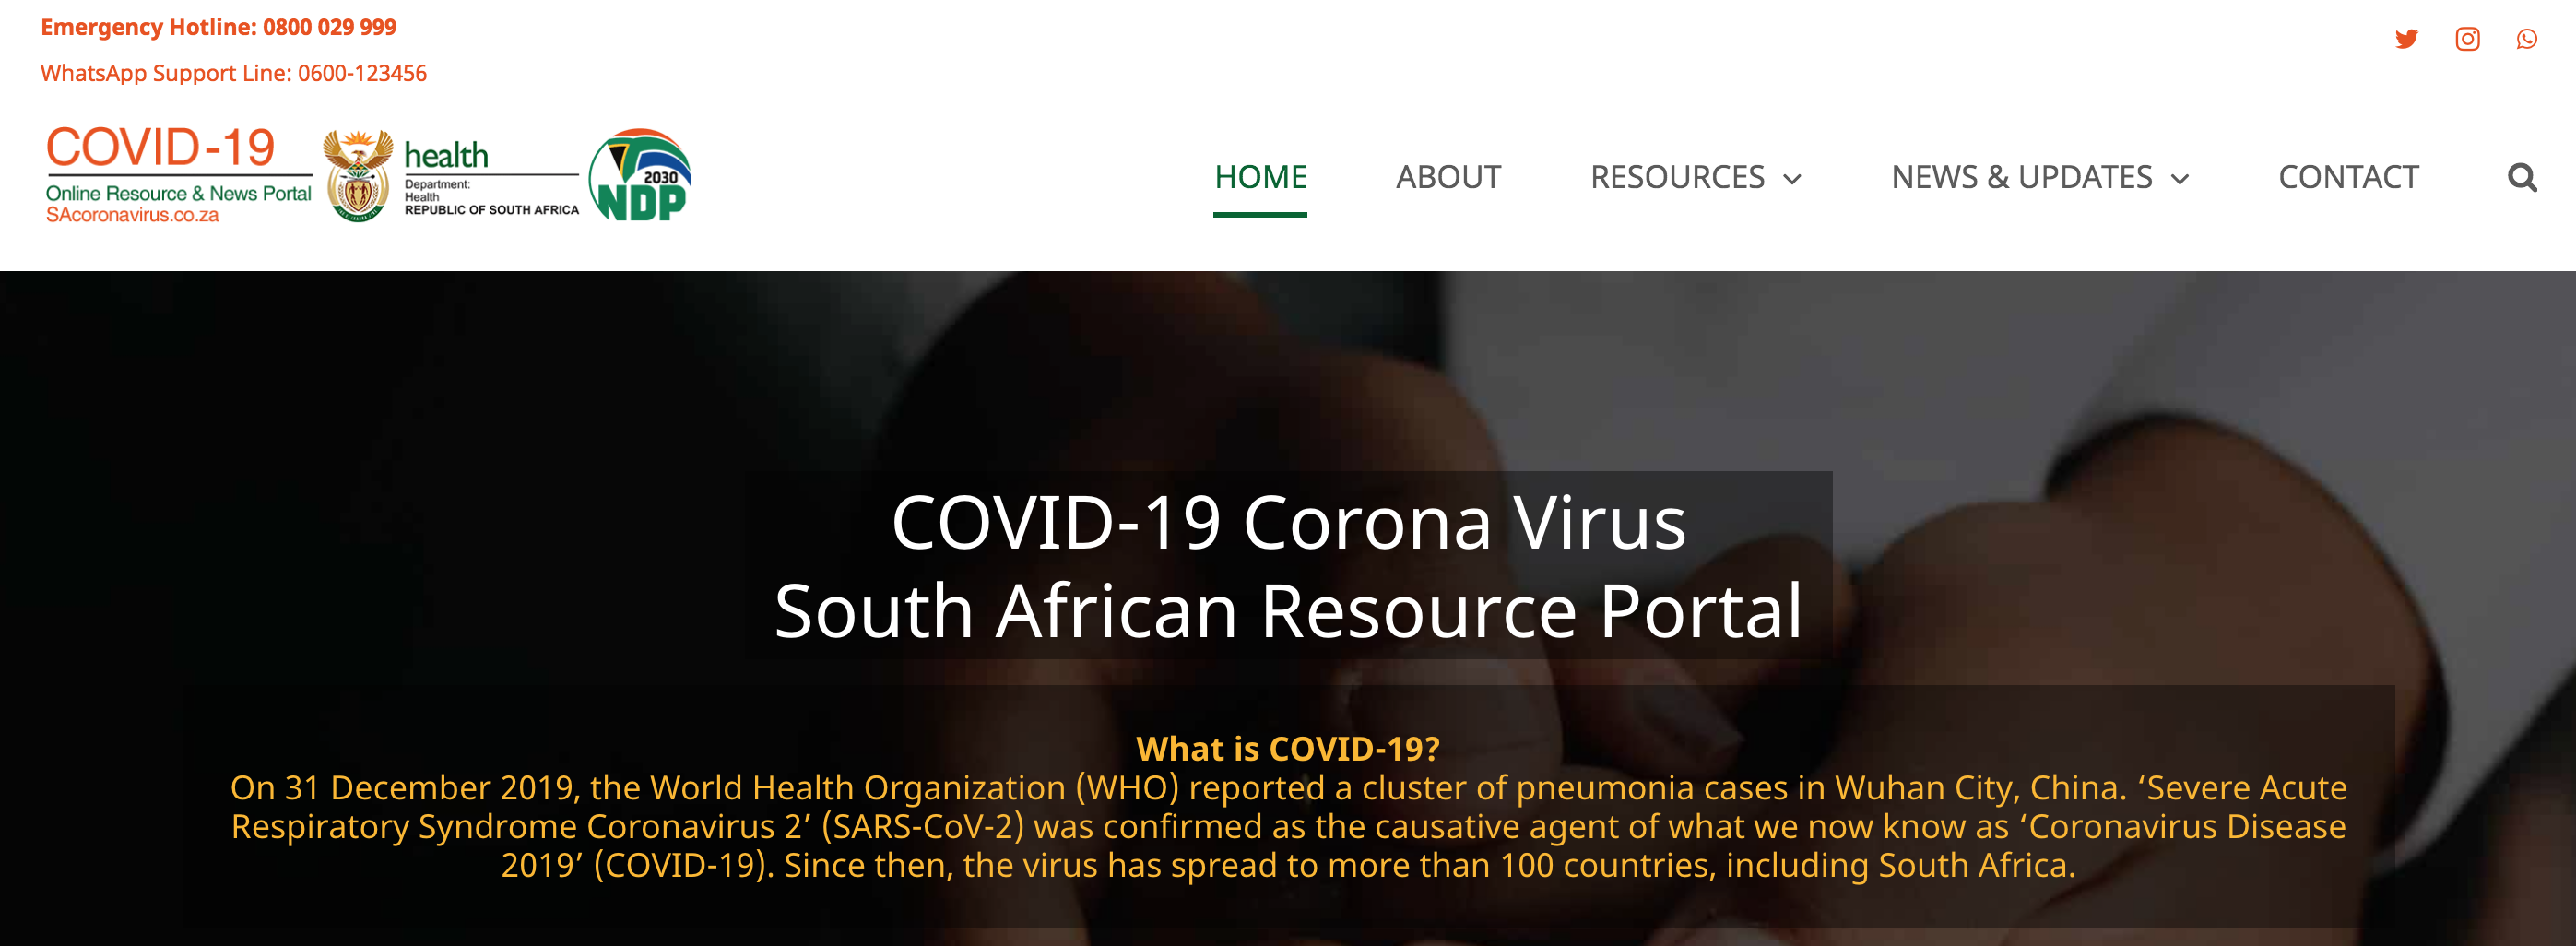 Covid-19 Corona Virus SA Resource Portal